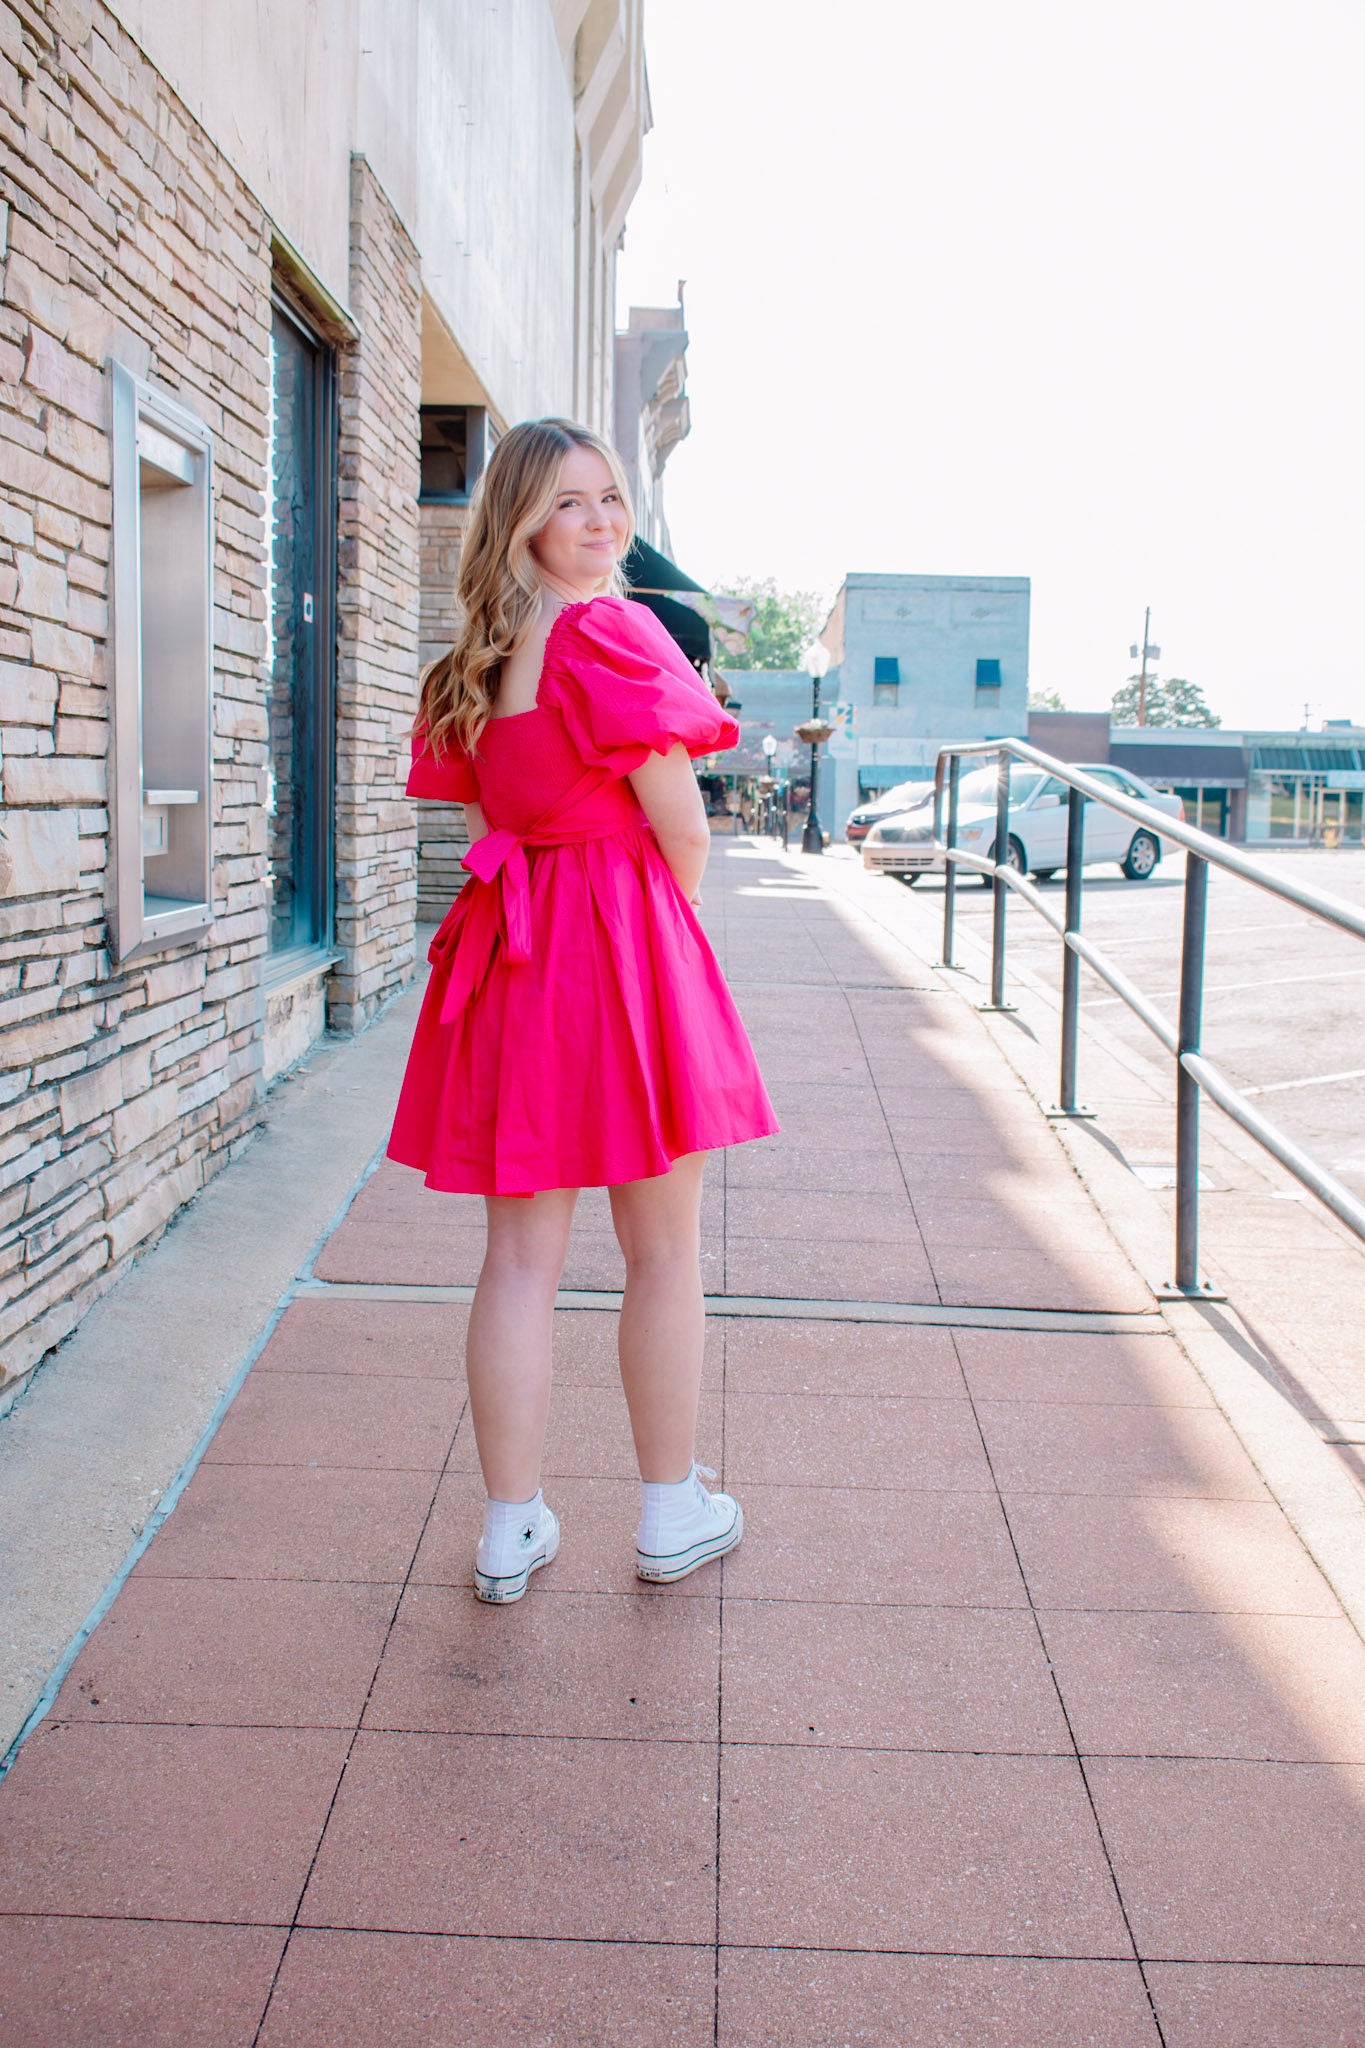 Pretty in pink dress